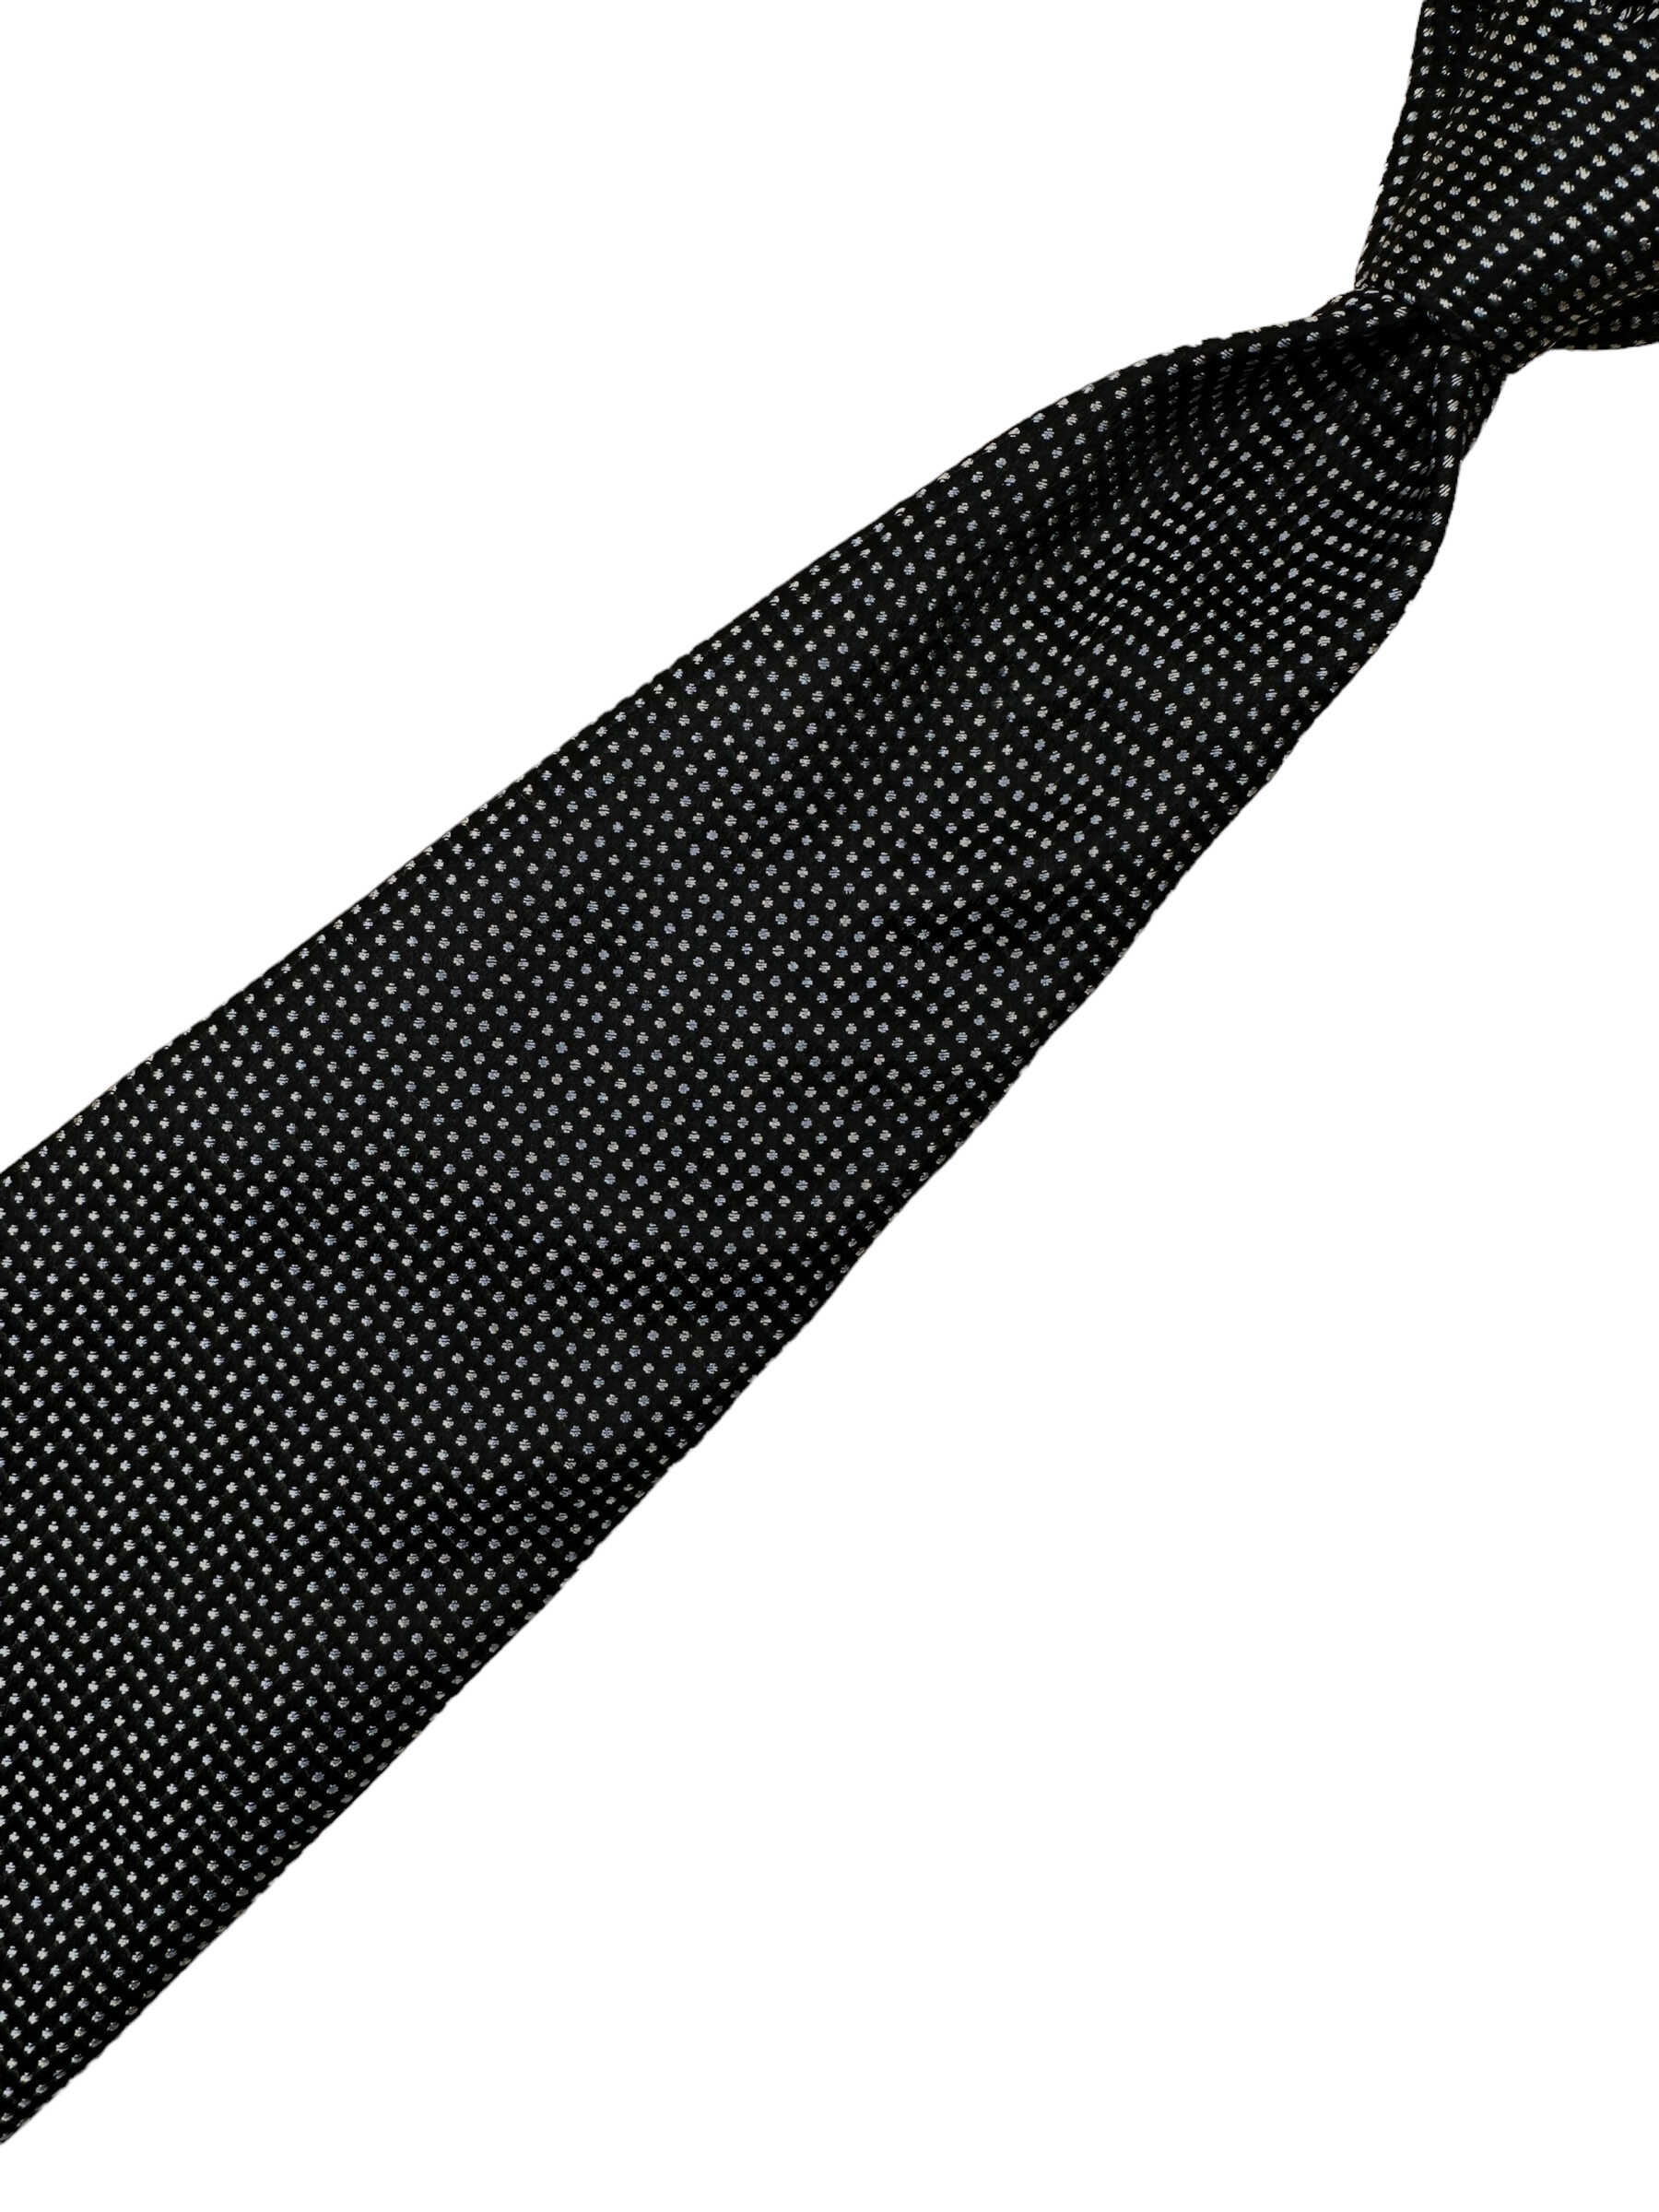 Giorgio Armni Grey Pin Dot Silk Tie - Genuine Design luxury consignment Calgary, Alberta, Canada New & pre-owned clothing, shoes, accessories.